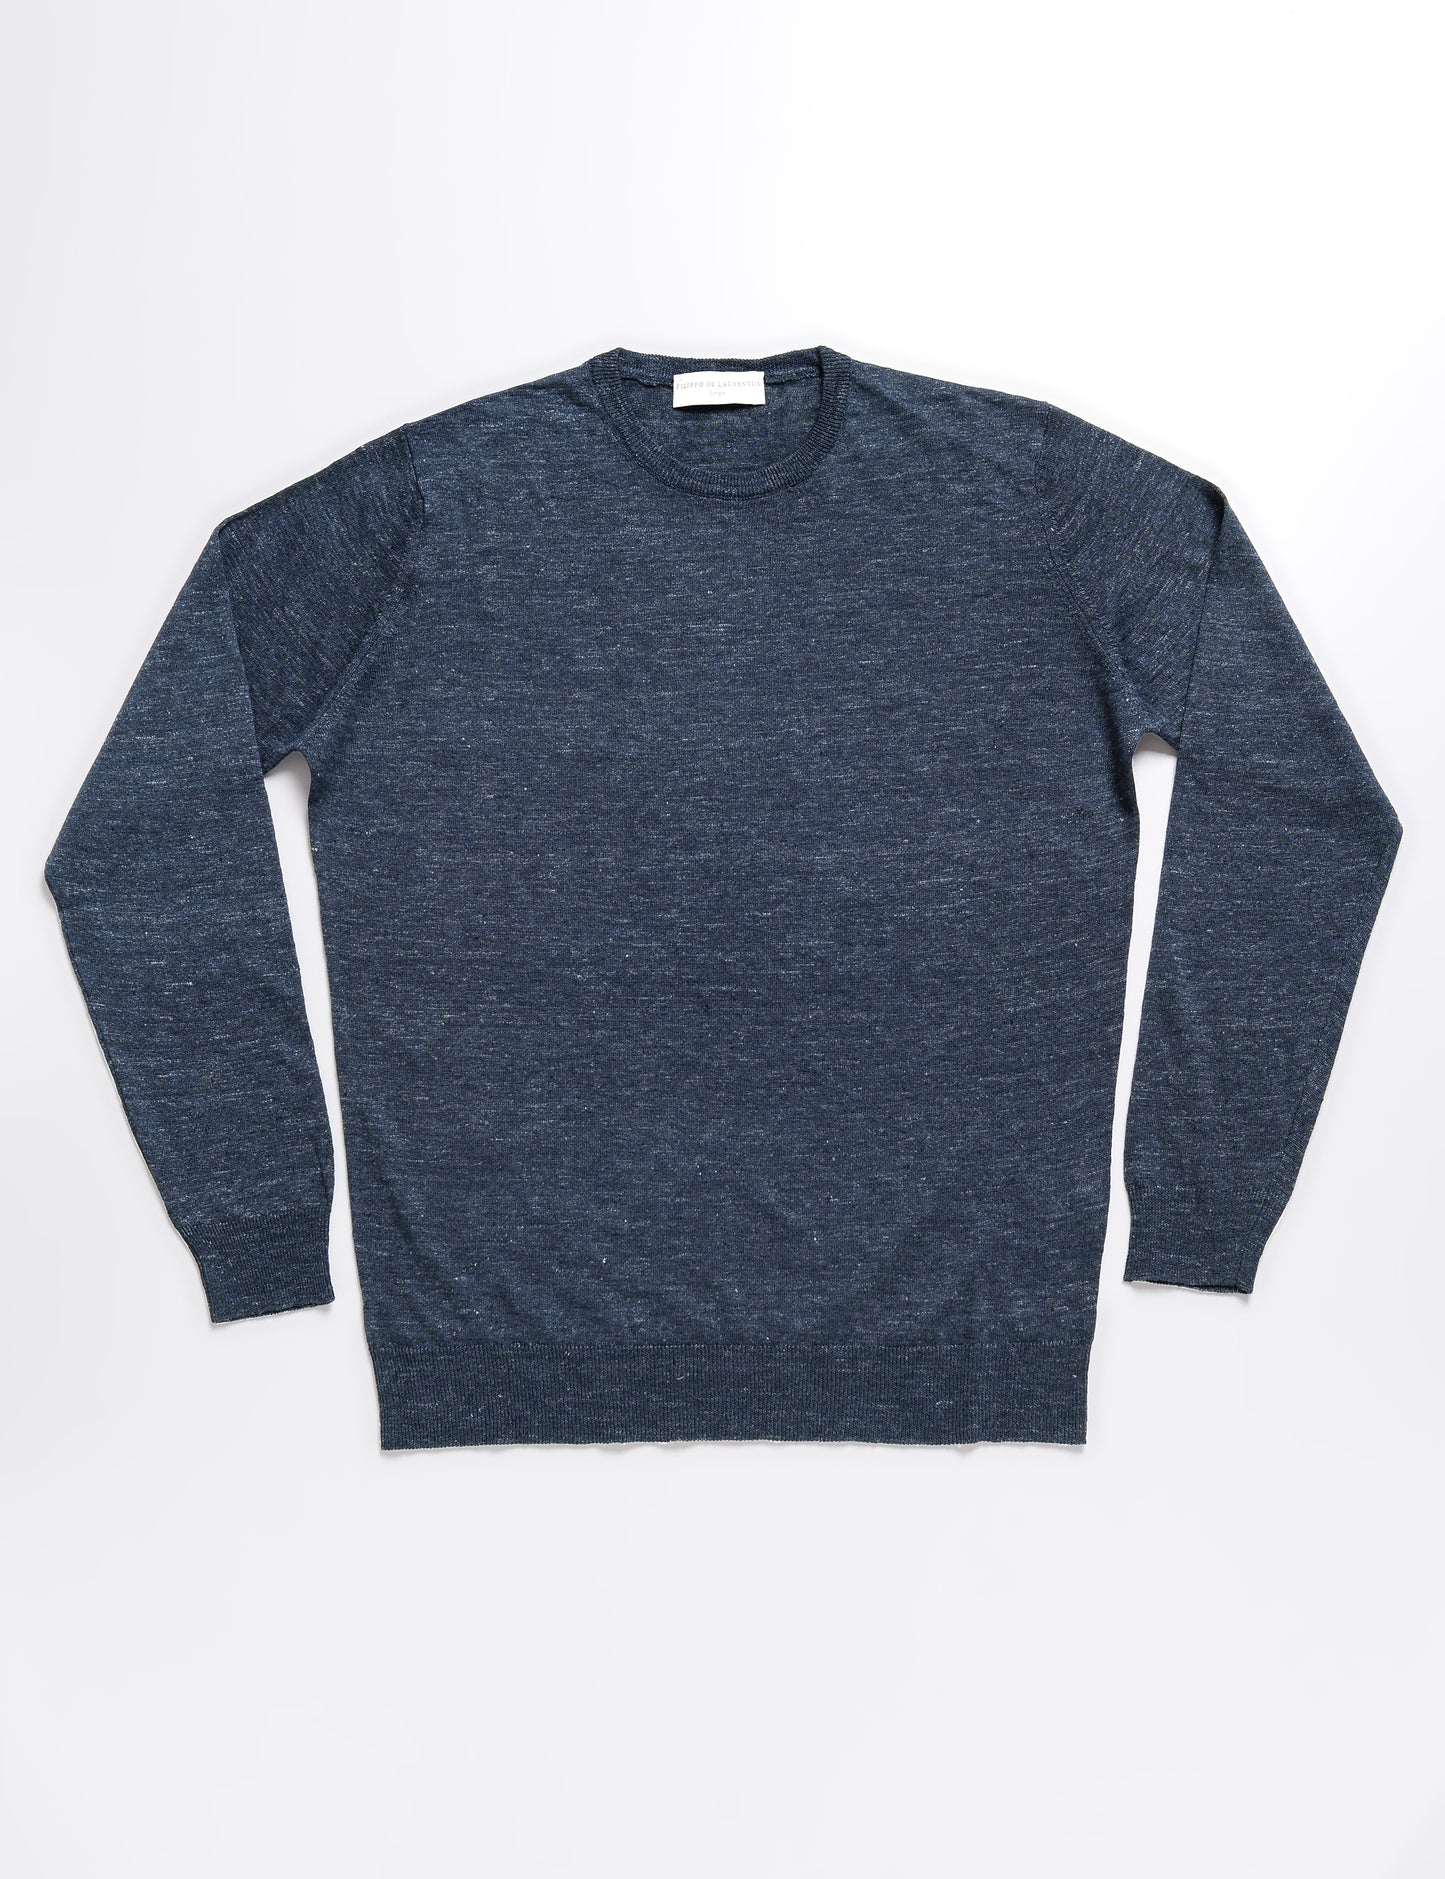 Linen/Cotton Crewneck Sweater - Heathered Charcoal